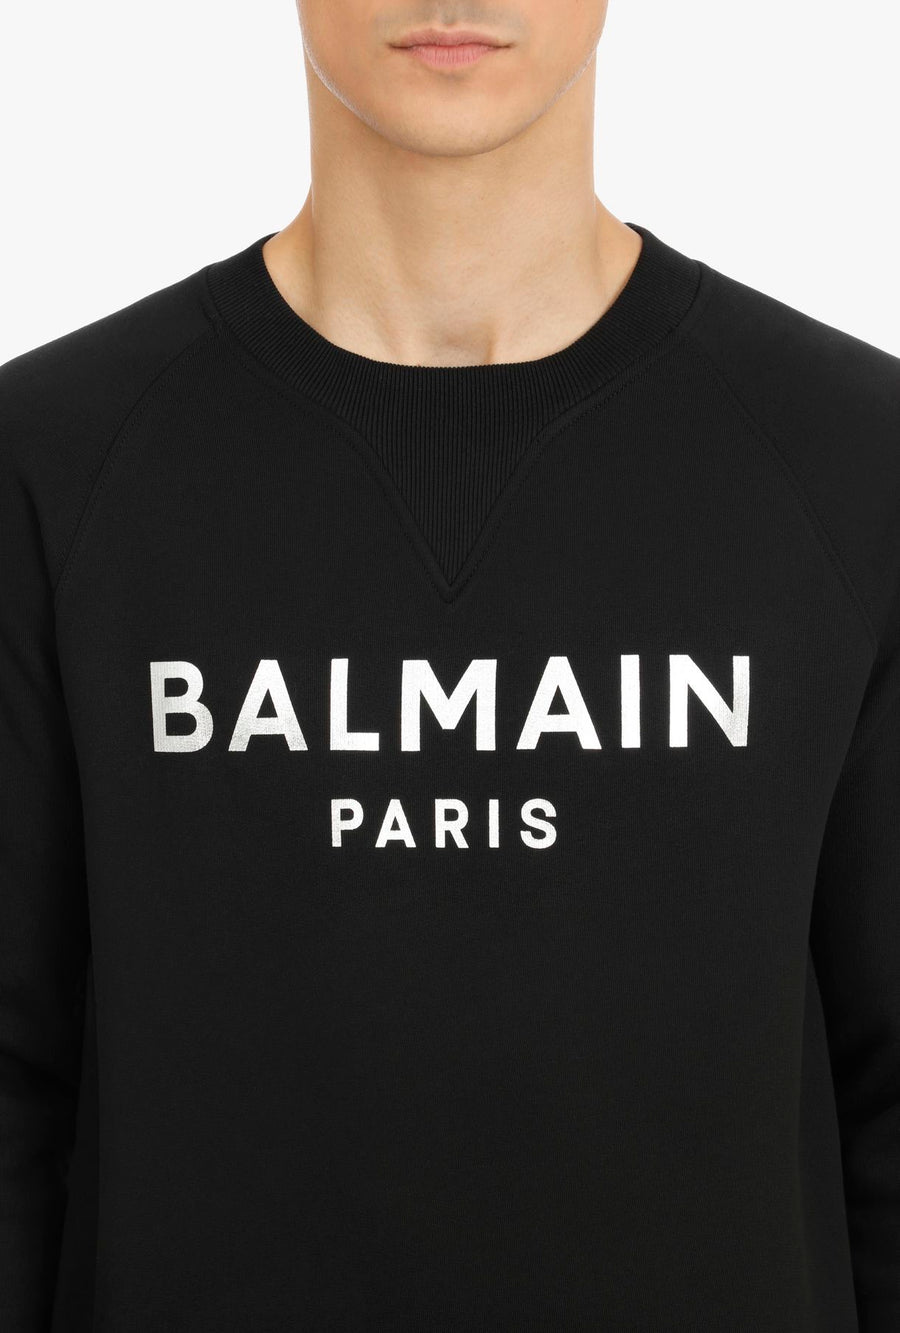 Black cotton sweatshirt with silver Balmain logo print